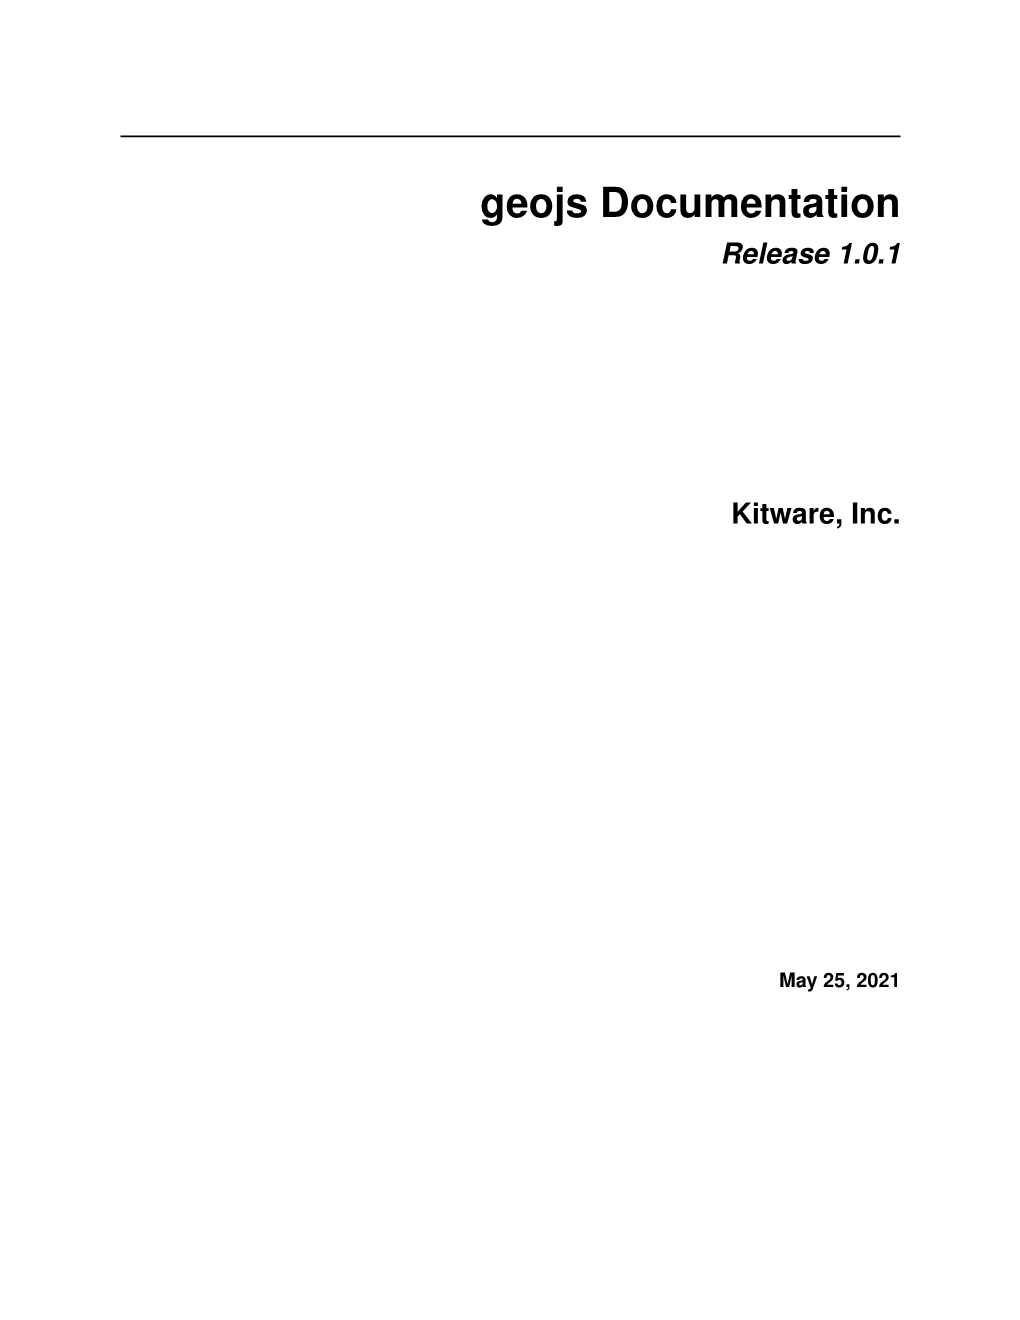 Geojs Documentation Release 1.0.1